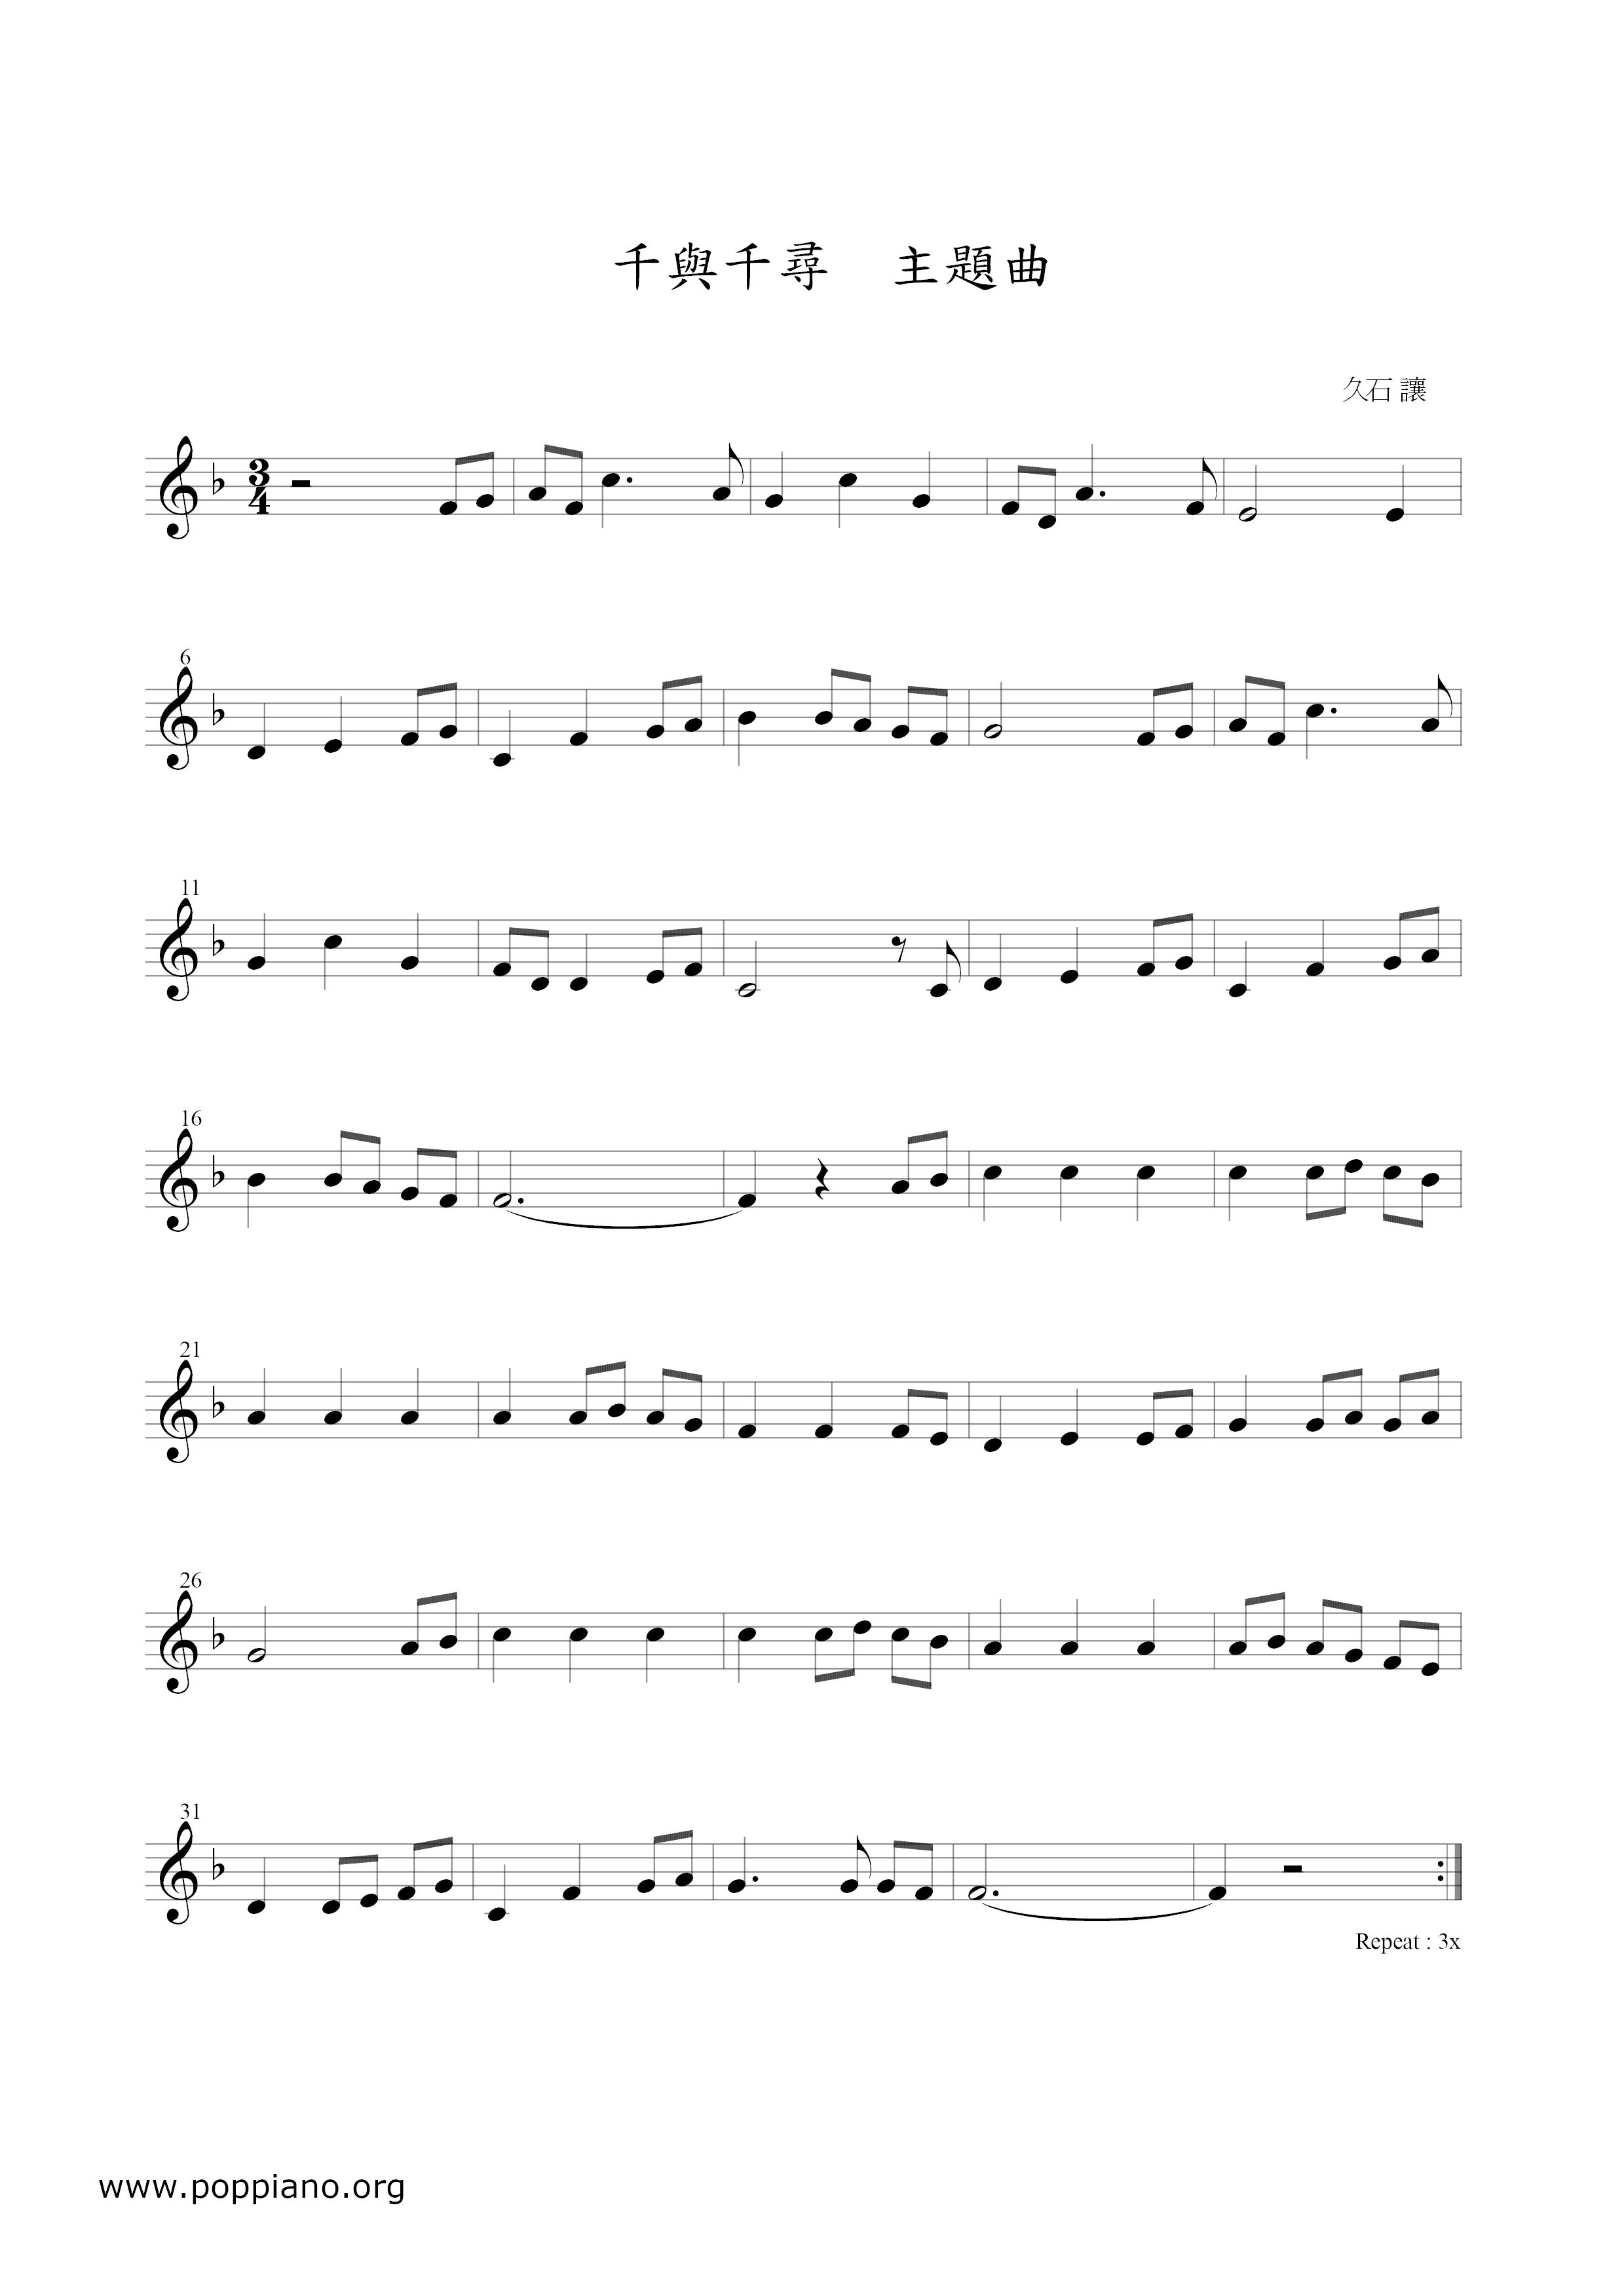 Joe Hisaish Spirited Away Always With Me Violin Score Pdf いつも何度でも 악보 楽譜 ひさいしじょう Free Score Download